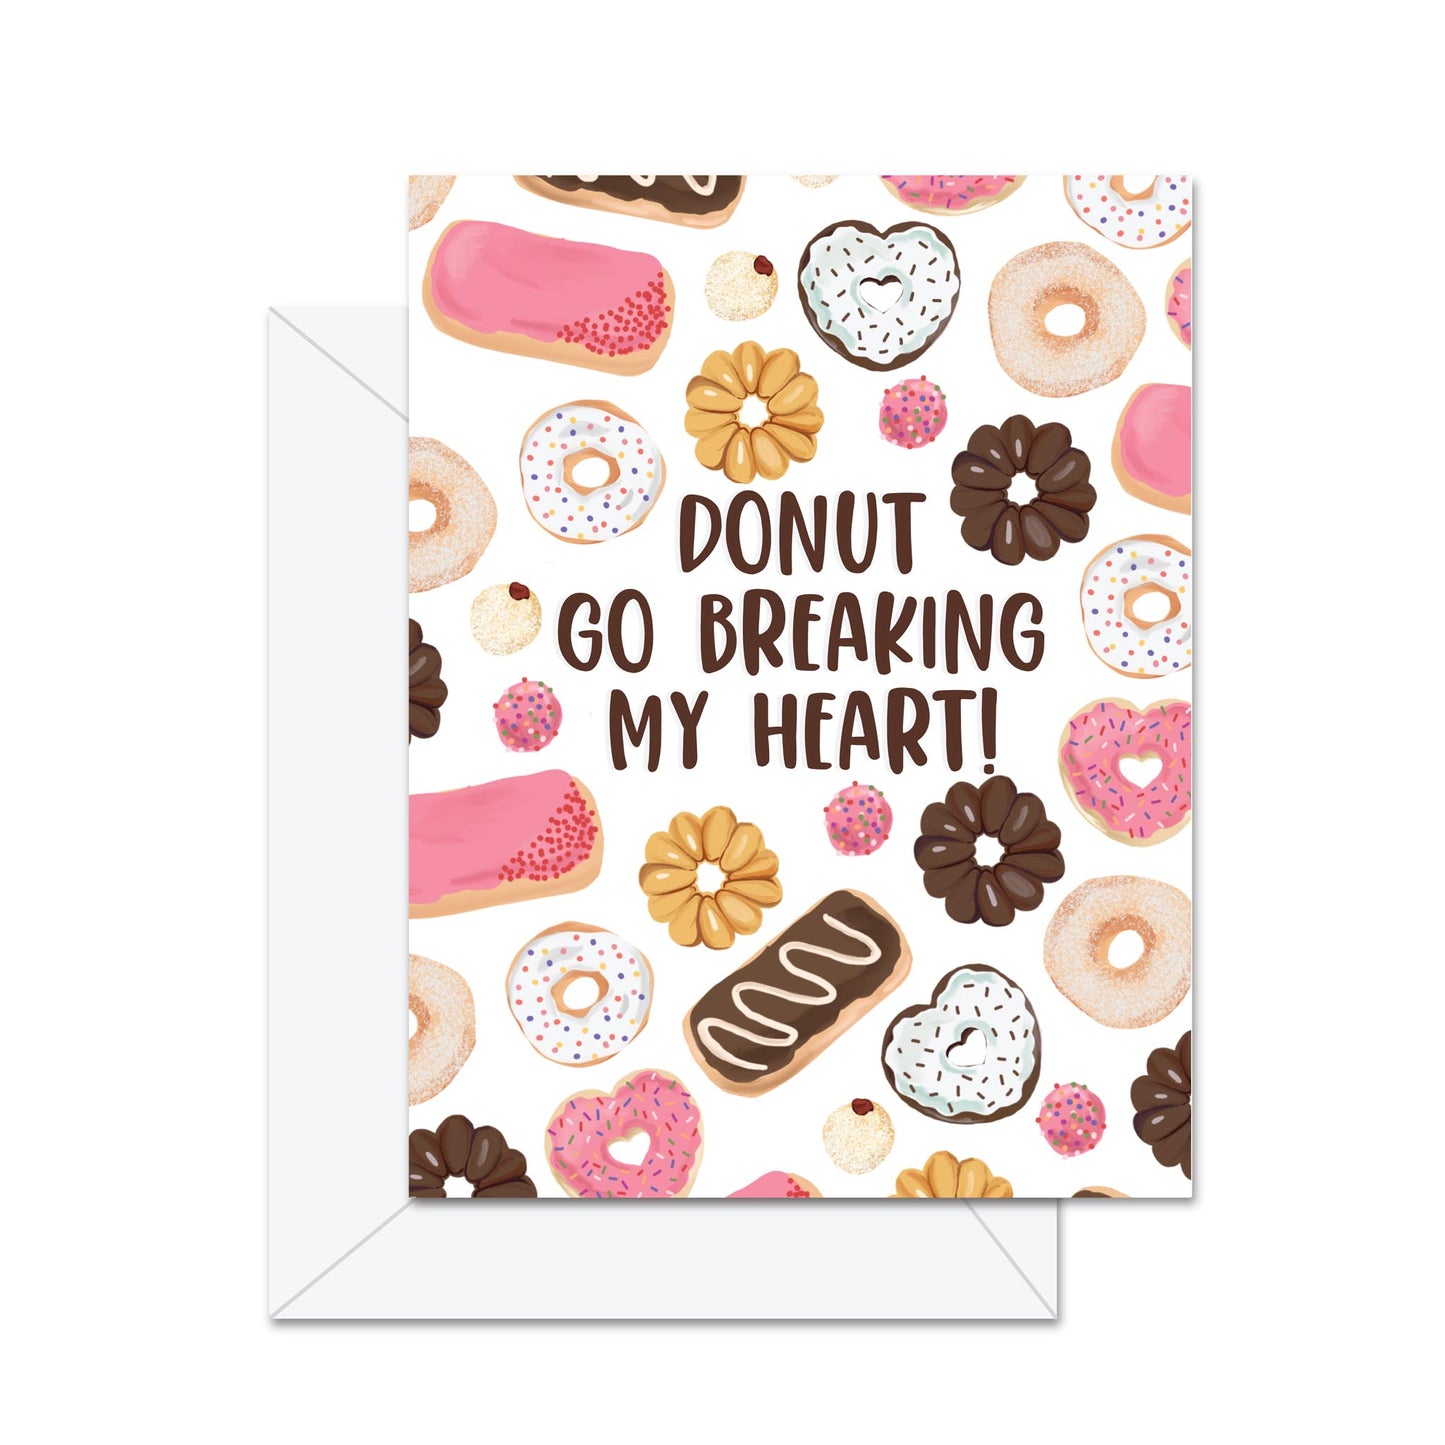 Donut Go Breaking My Heart - Greeting Card